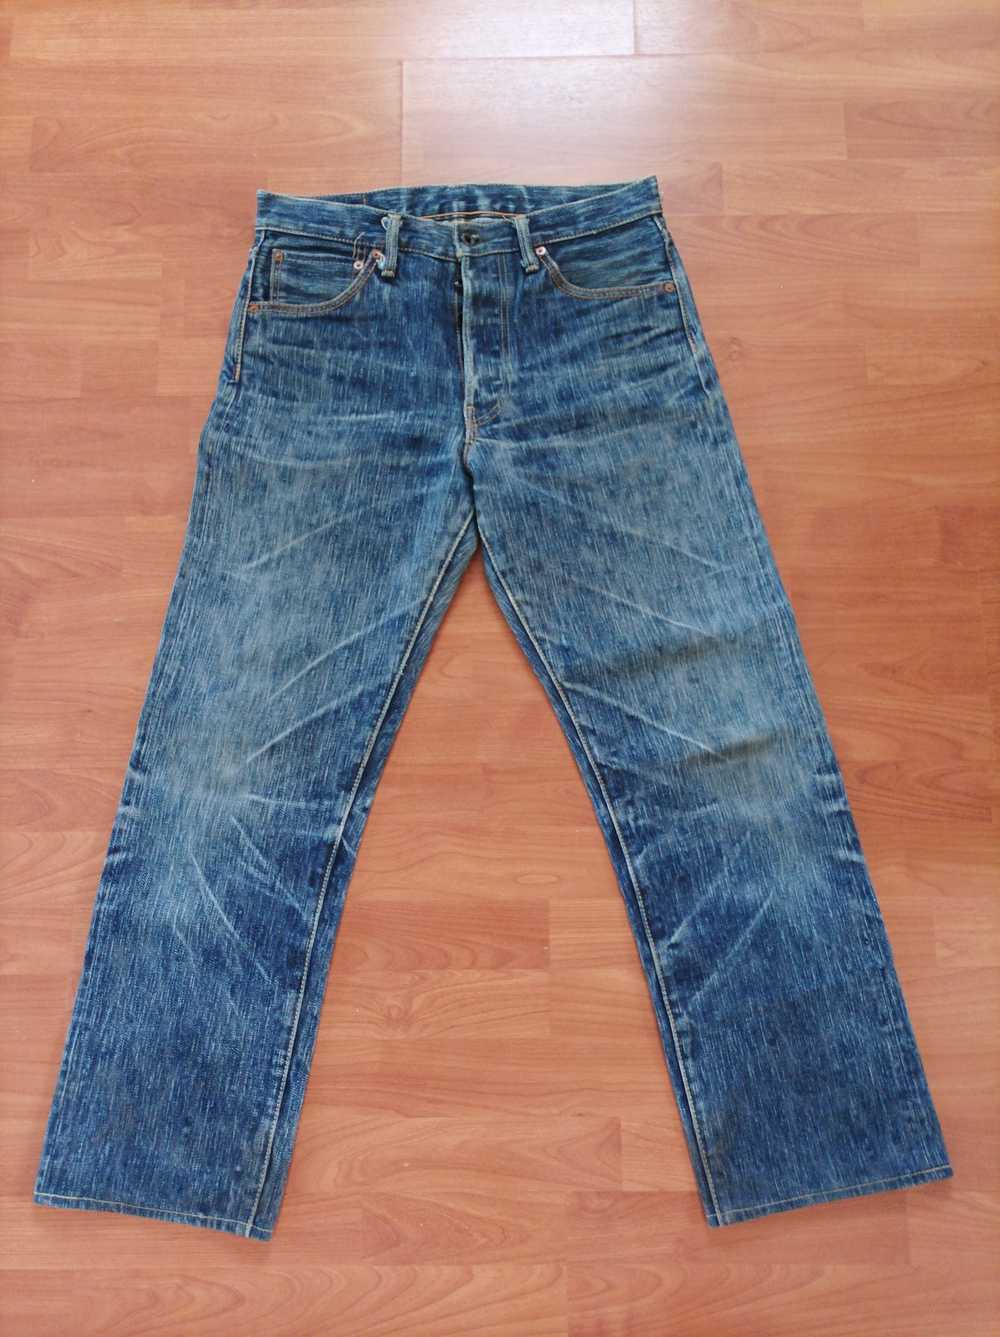 Oni Oni Selvedge Denim Jeans W31 Japanese - image 3